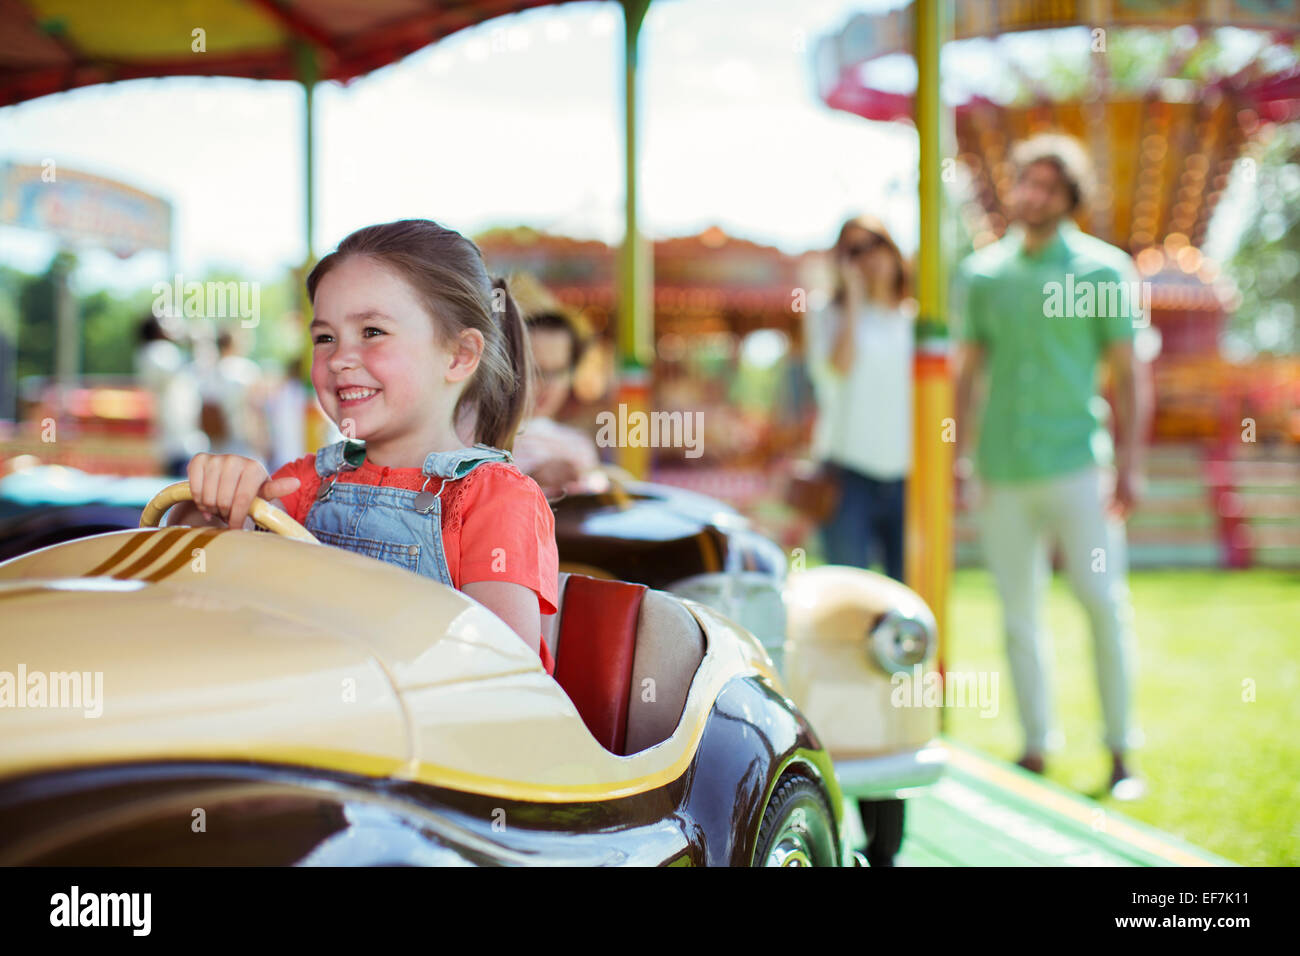 Cheerful girl on carousel in amusement park Stock Photo